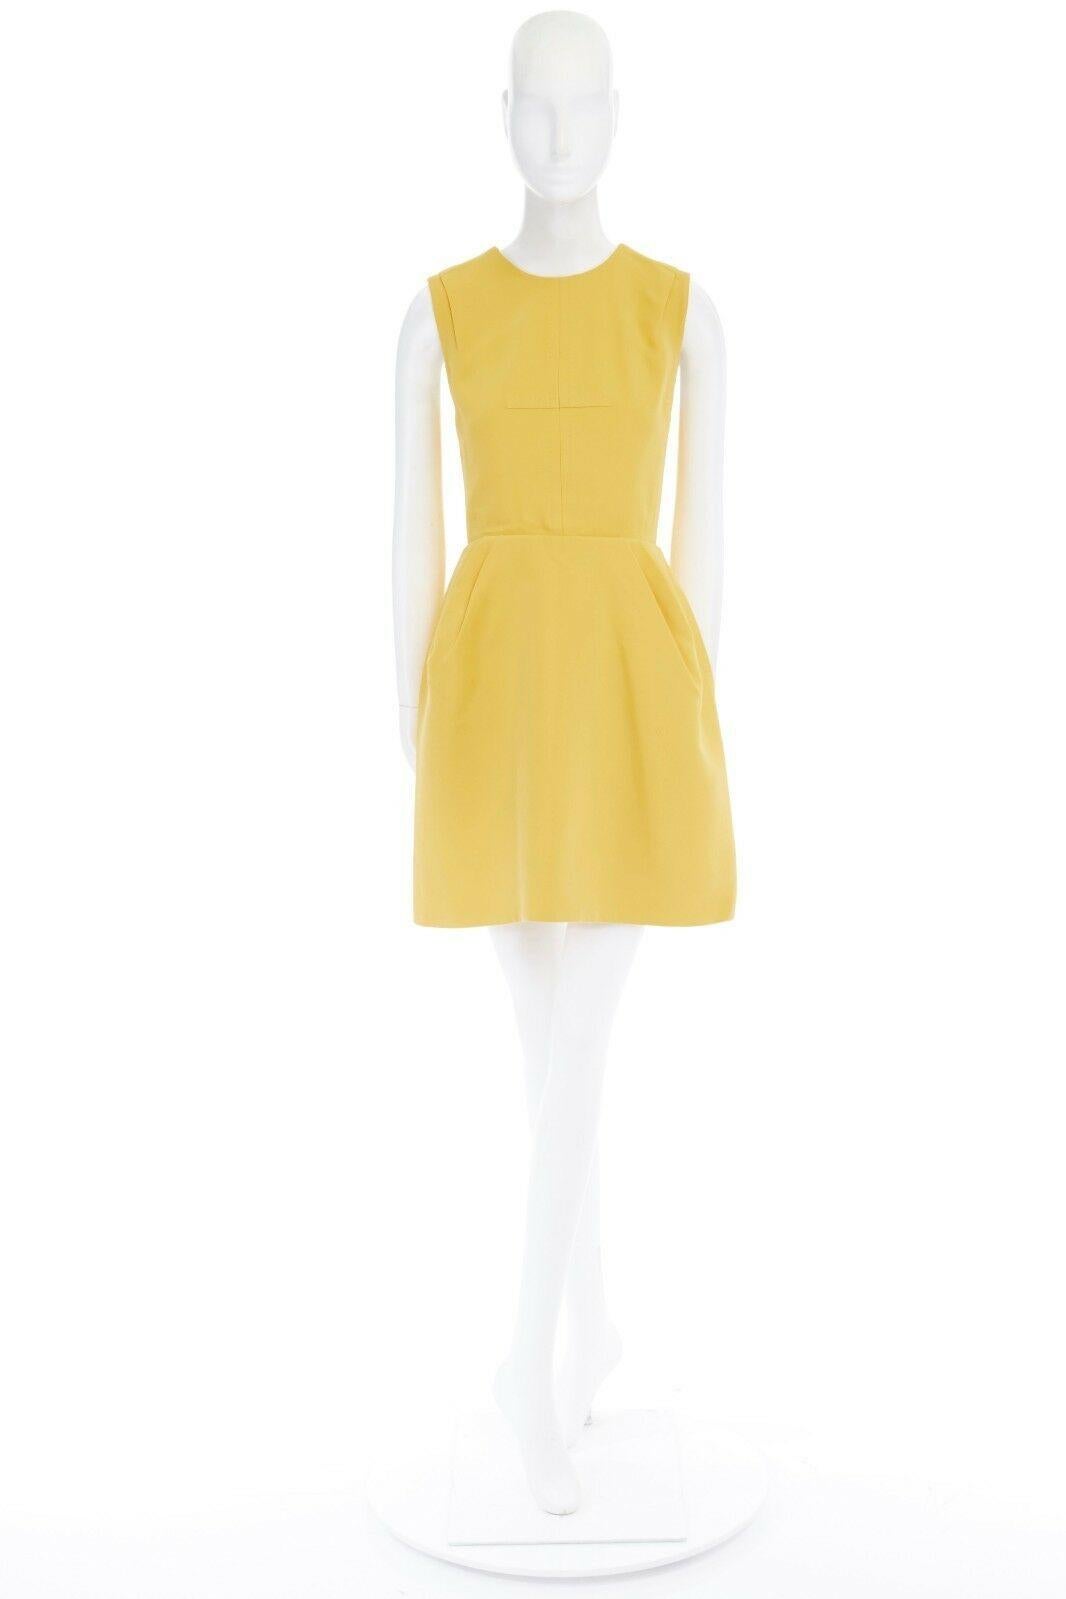 louis vuitton yellow dress